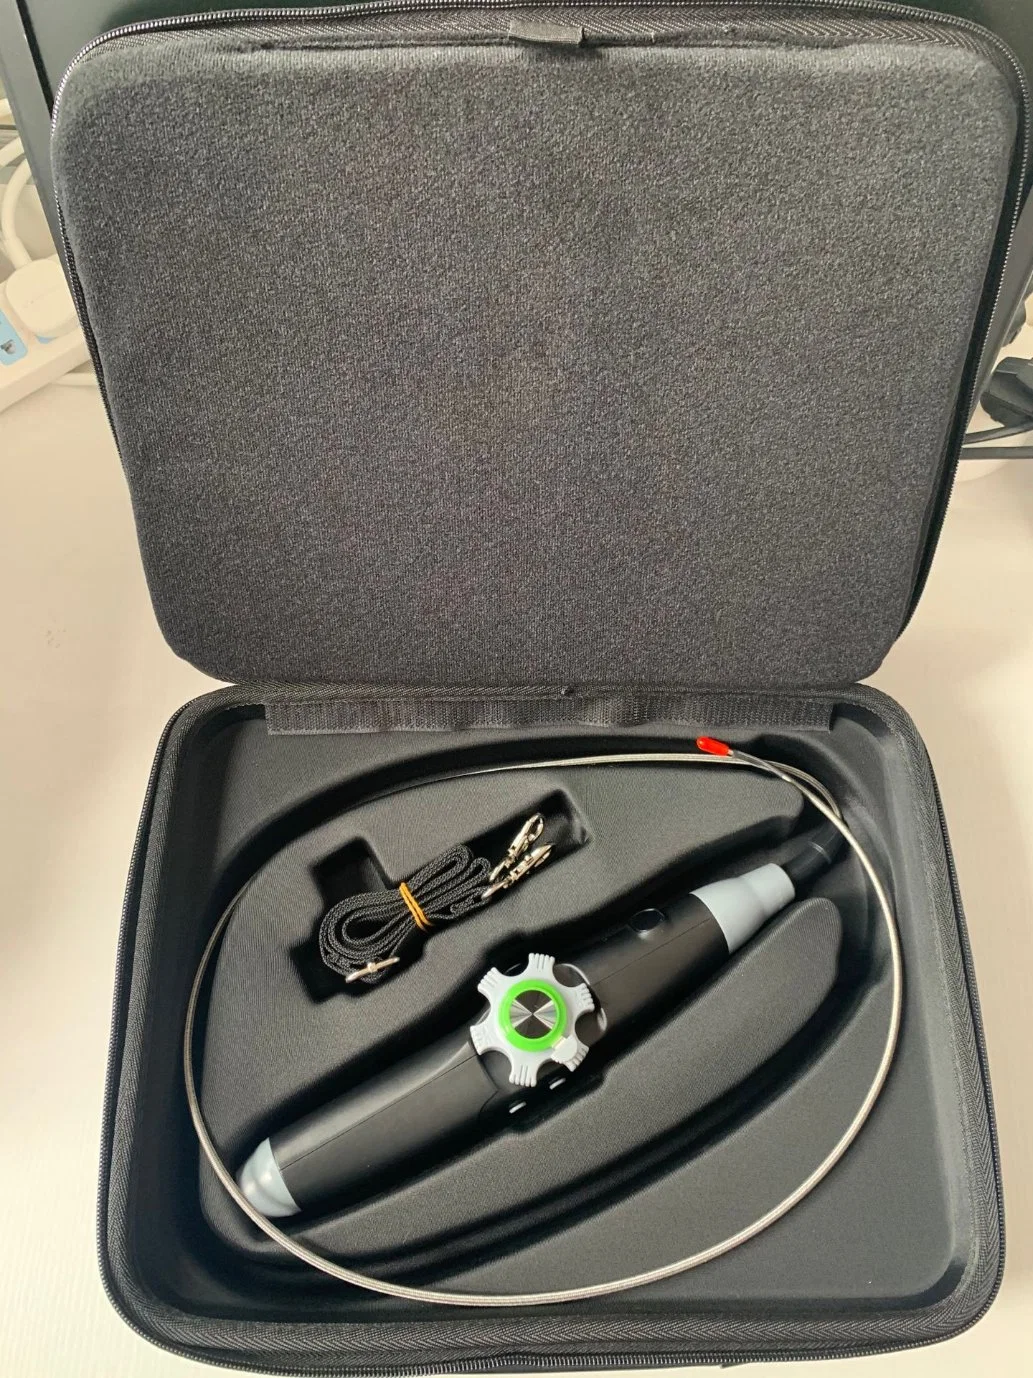 Tragbare Borescope Inspektionskamera für industrielle Fahrzeuge, WiFi/USB